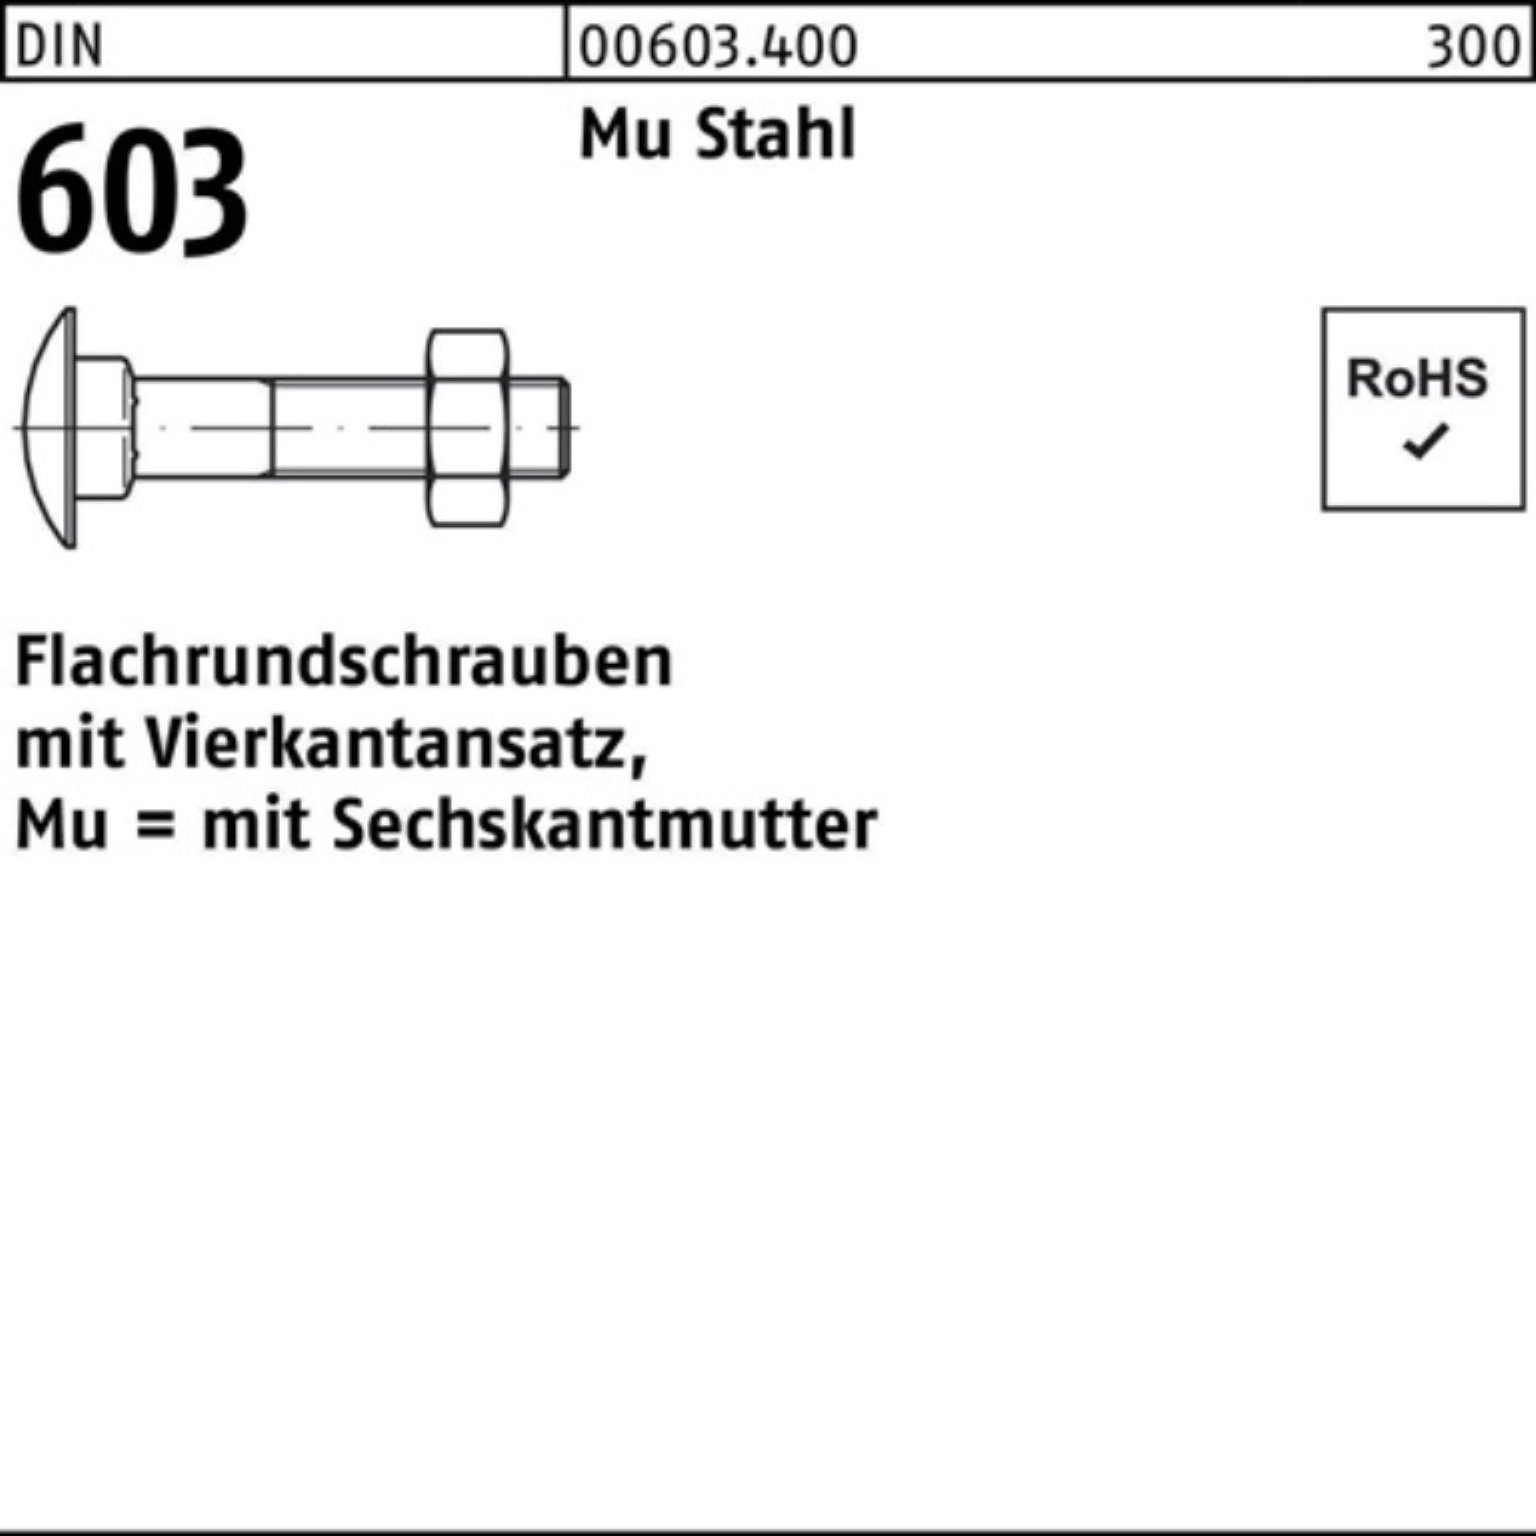 Reyher DIN 100er Schraube Flachrundschraube Pack 603 Vierkantansatz/6-ktmutter M20x120